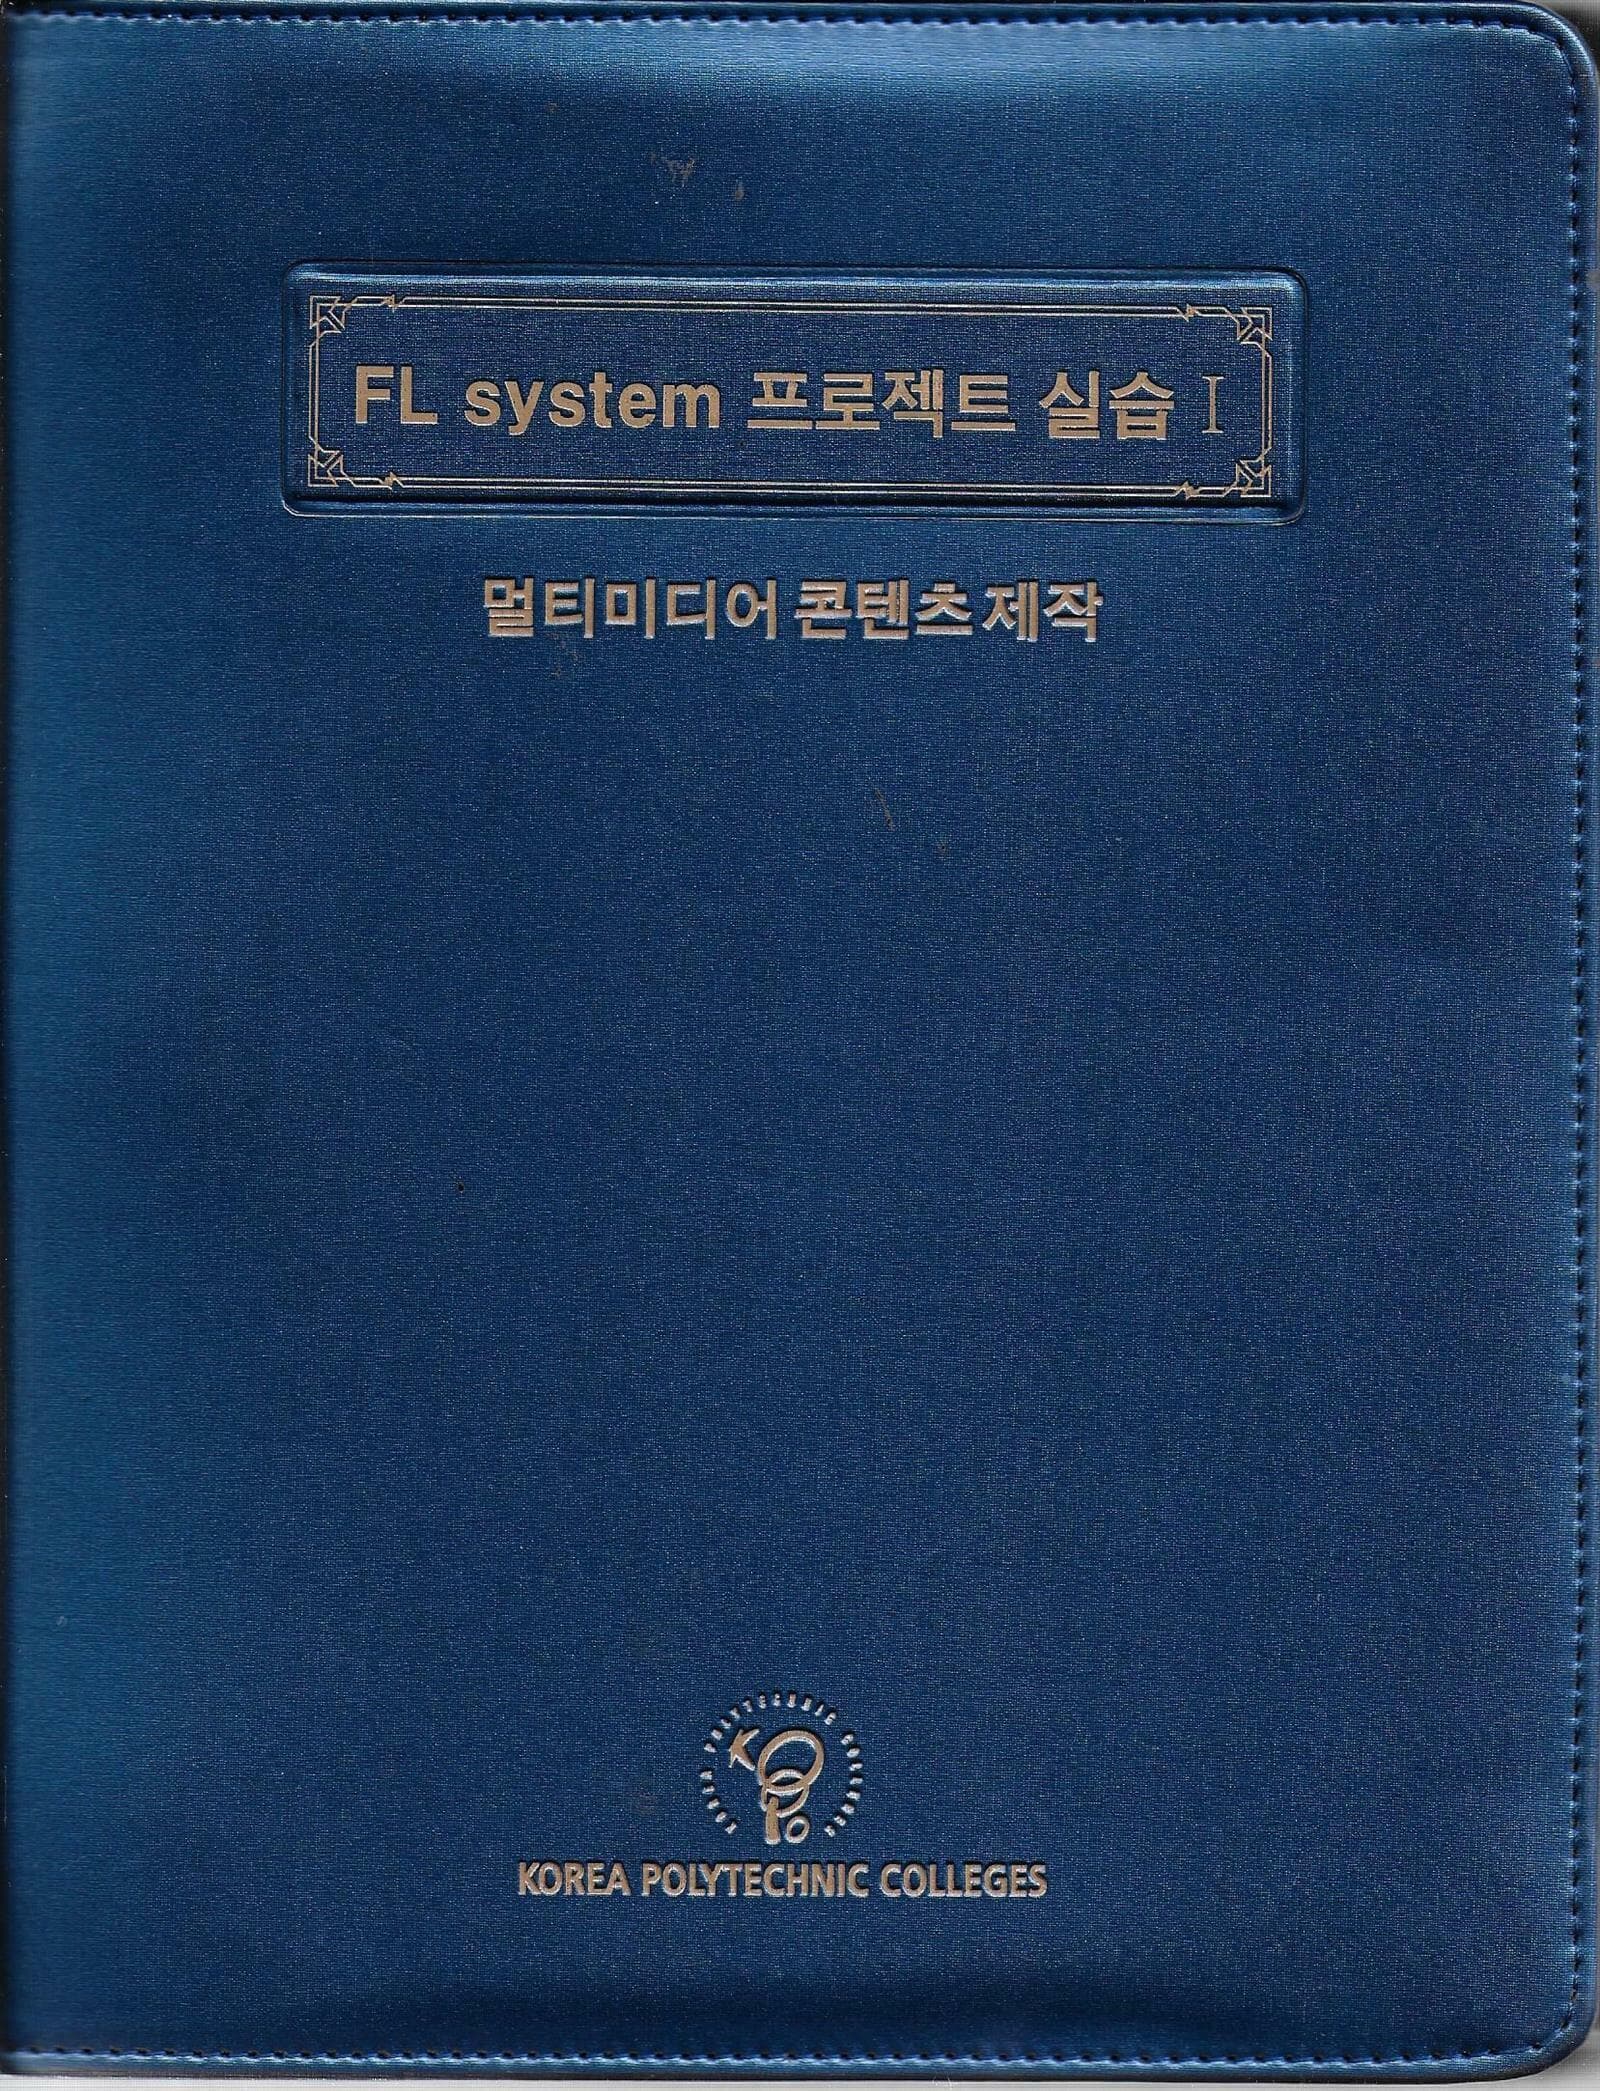 FL system 프로젝트 실습(1) 멀티미디어 콘텐츠 제작 [양장/바인더북/CD 1 포함]